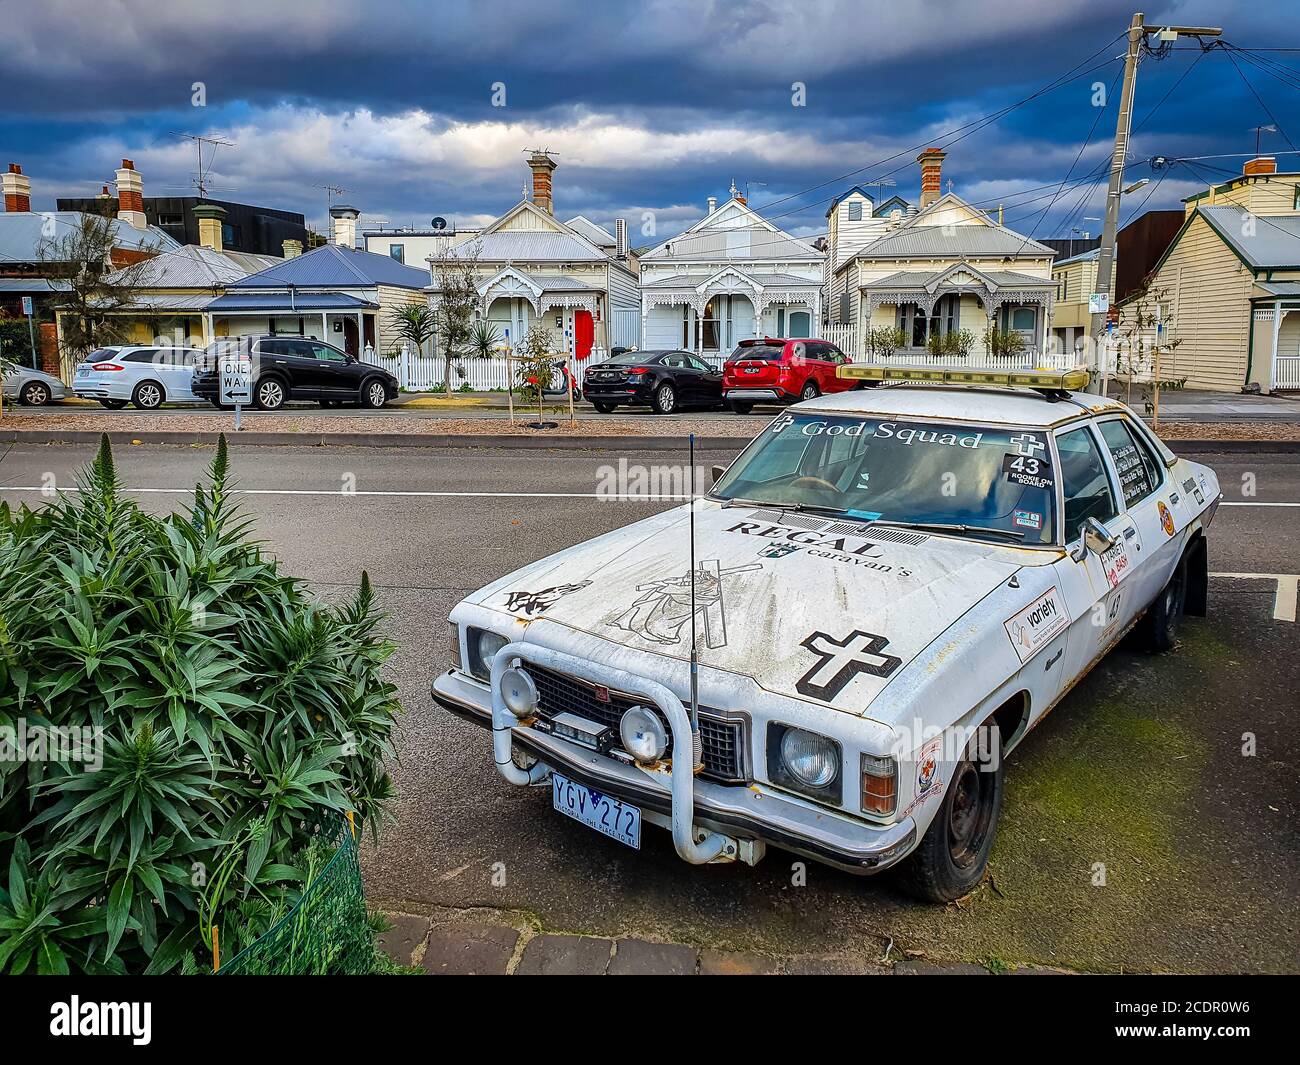 Melbourne, Australia - Classic Australian car Holden HX covered in religious messages Stock Photo